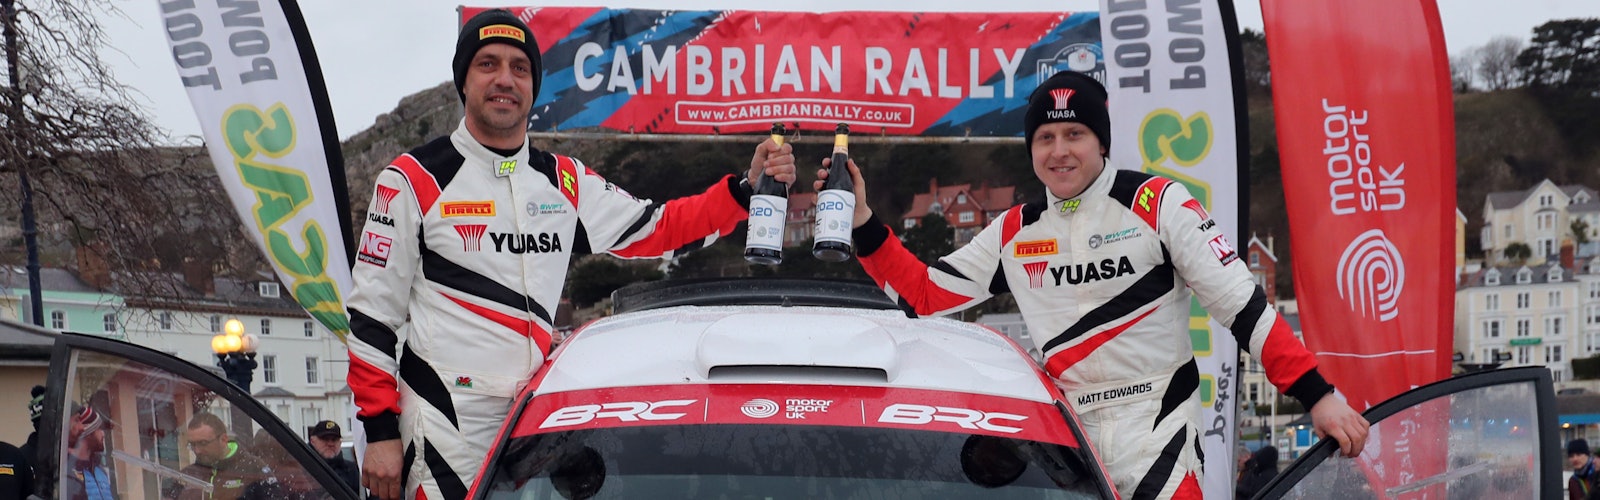 Matt Edwards wins Cambrian Rally British Rally Championship 2020